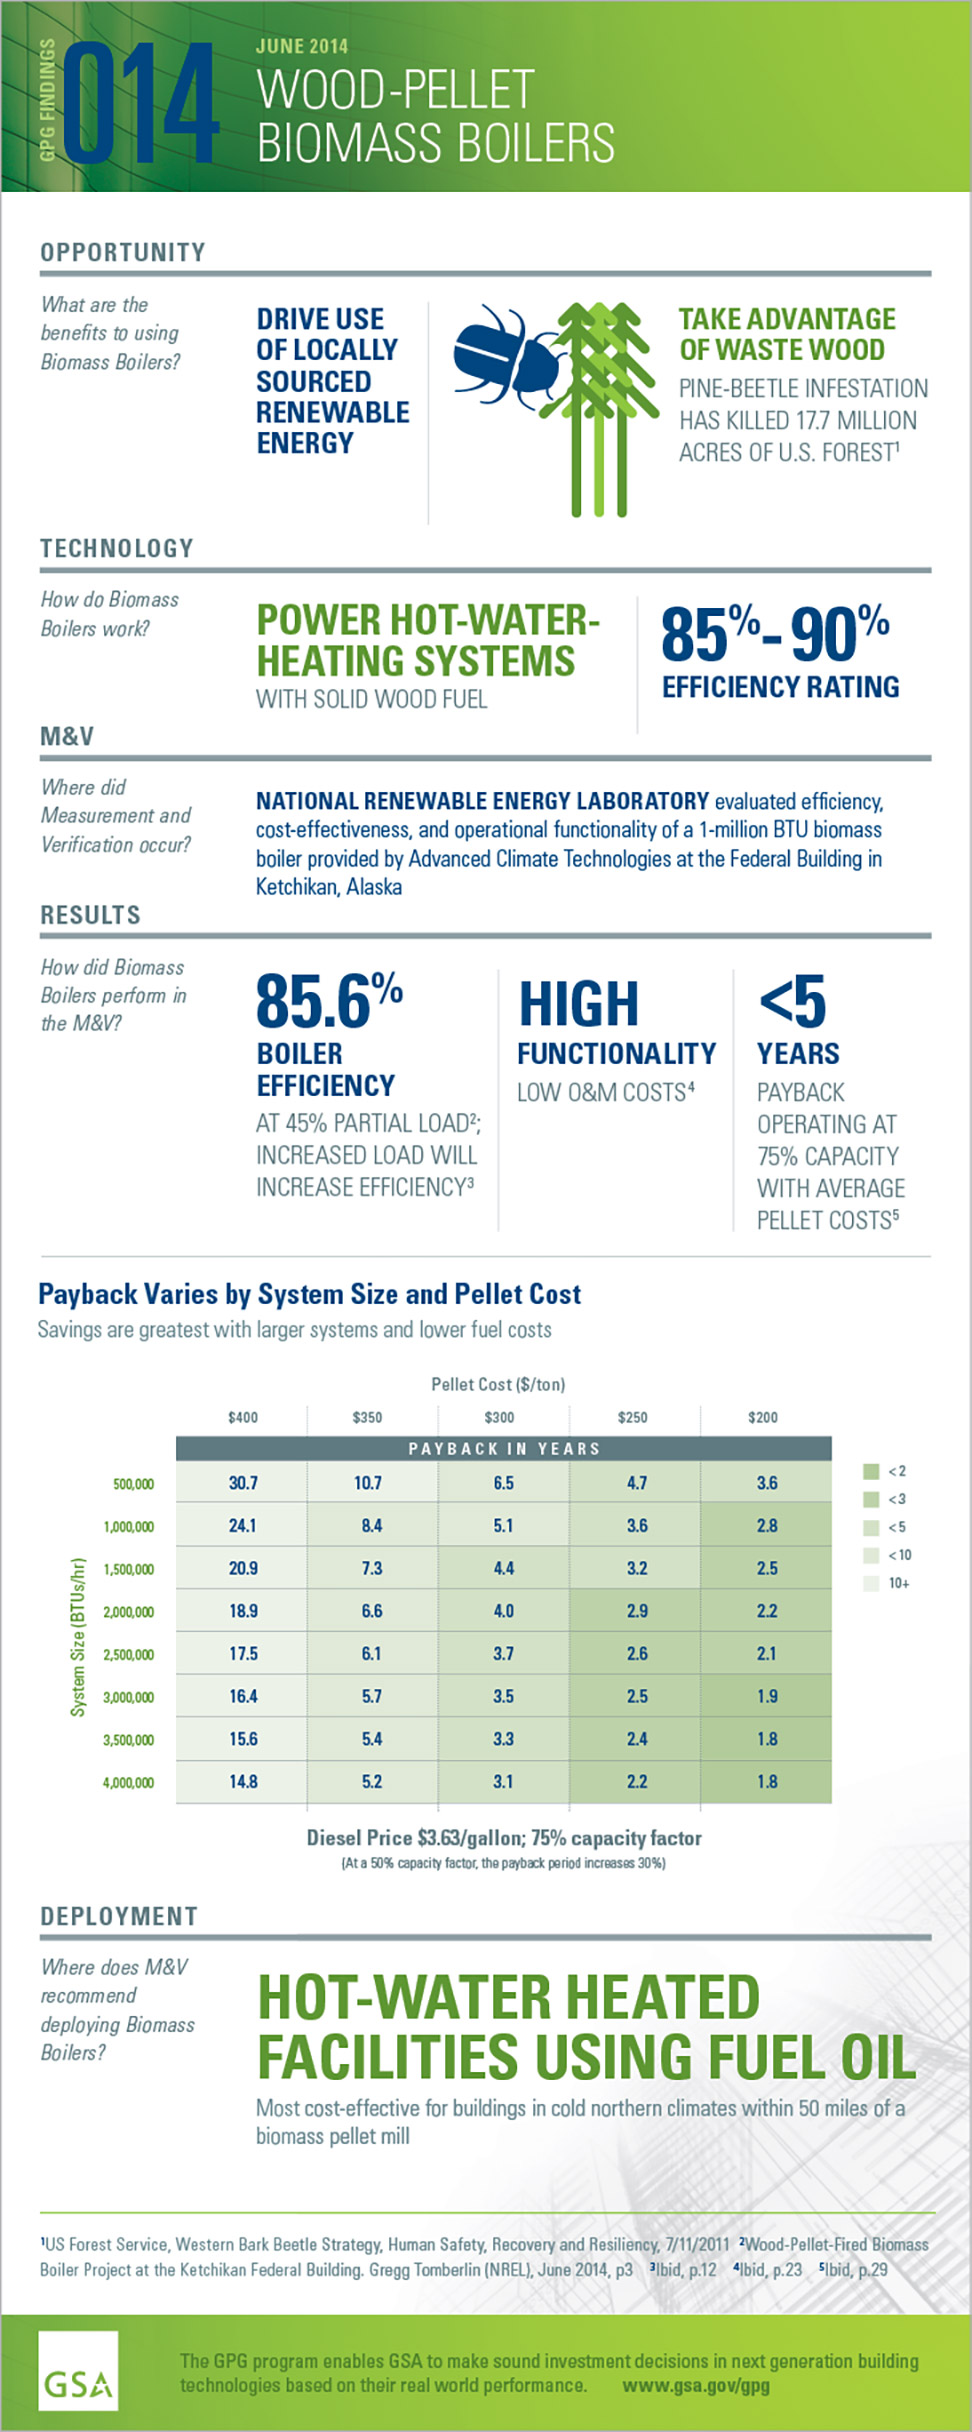 Infographic: GPG findings 014: June 2014, Wood-pellet biomass boilers